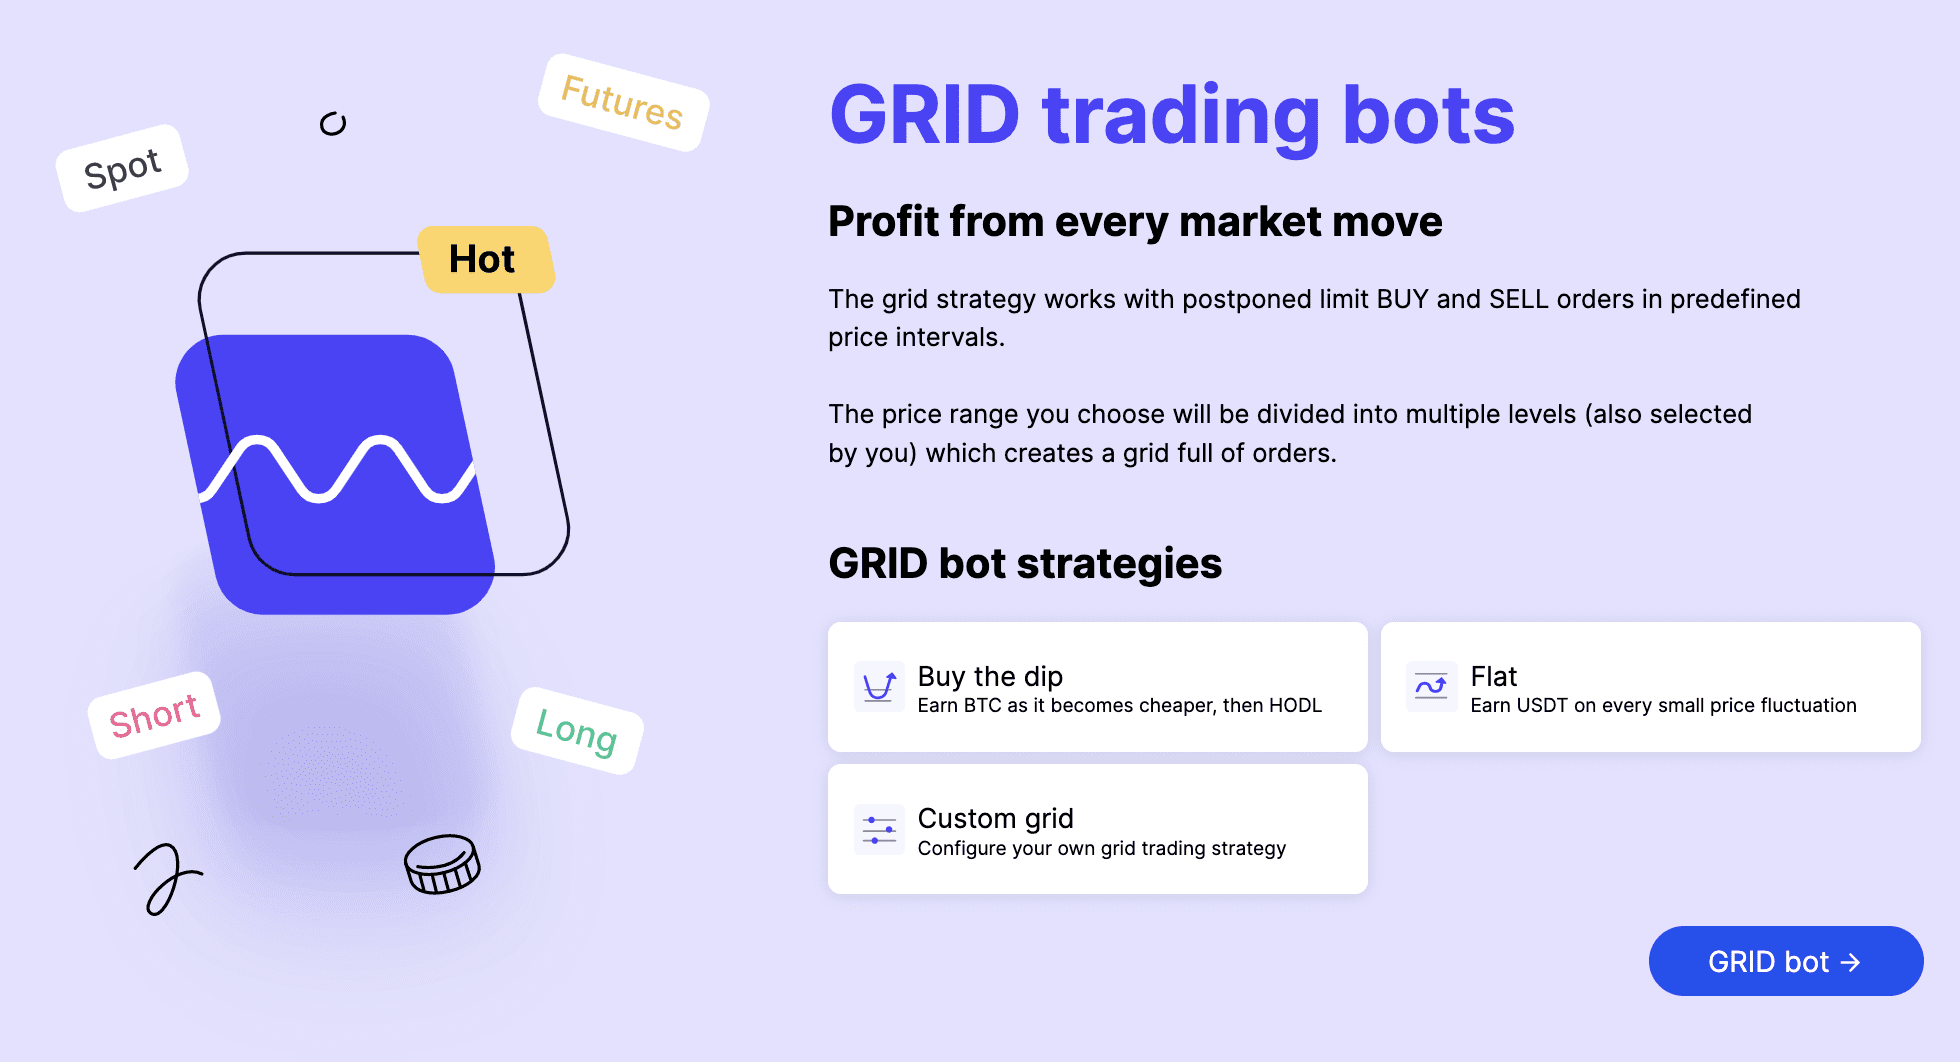 GRID trading bots